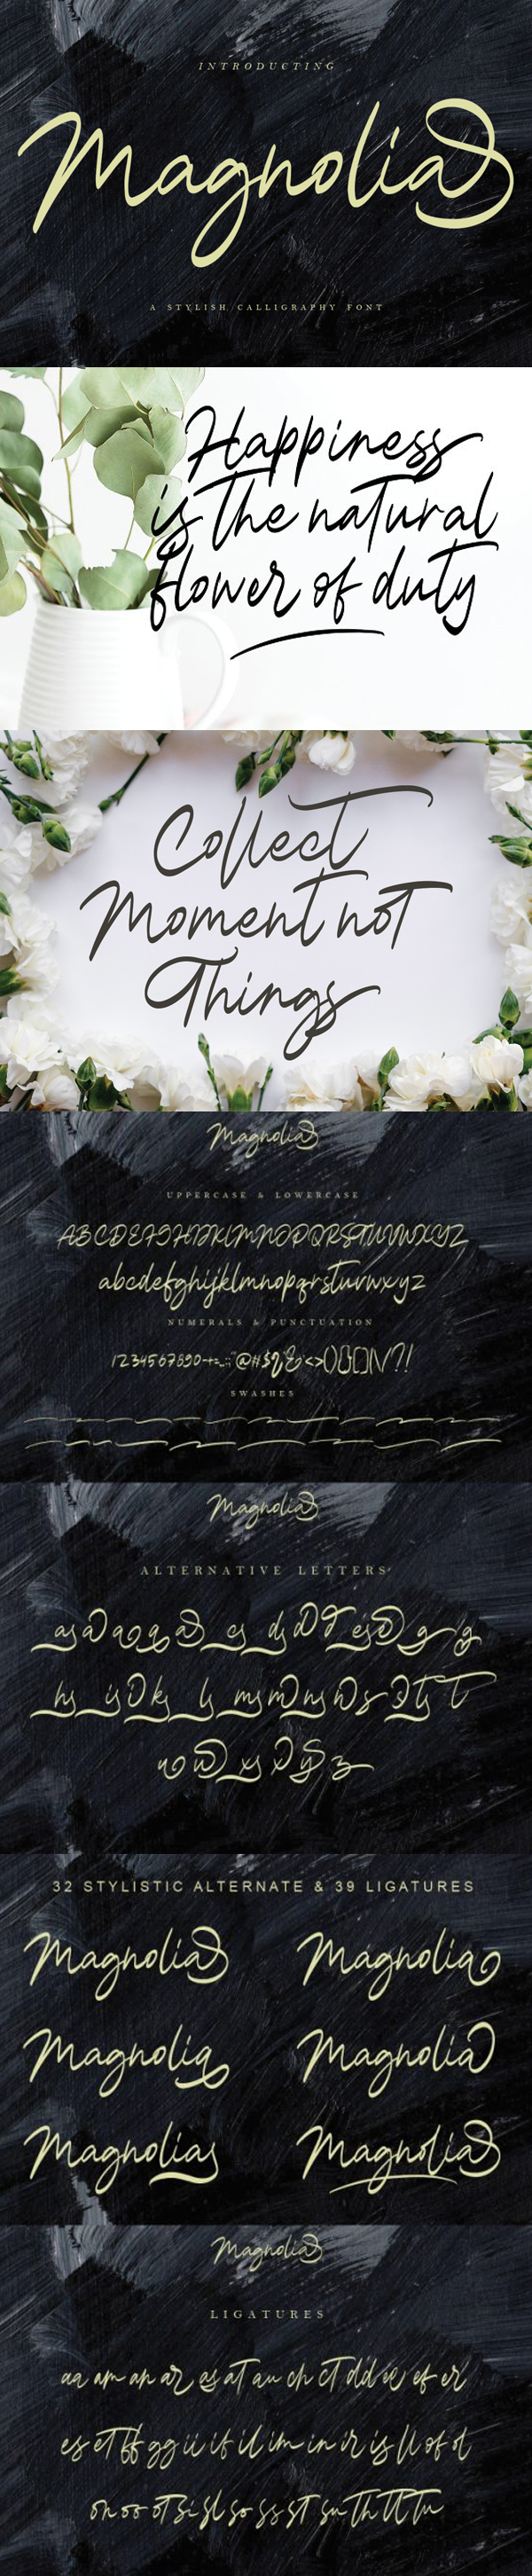 Magnolia Calligraphy Free Font Design